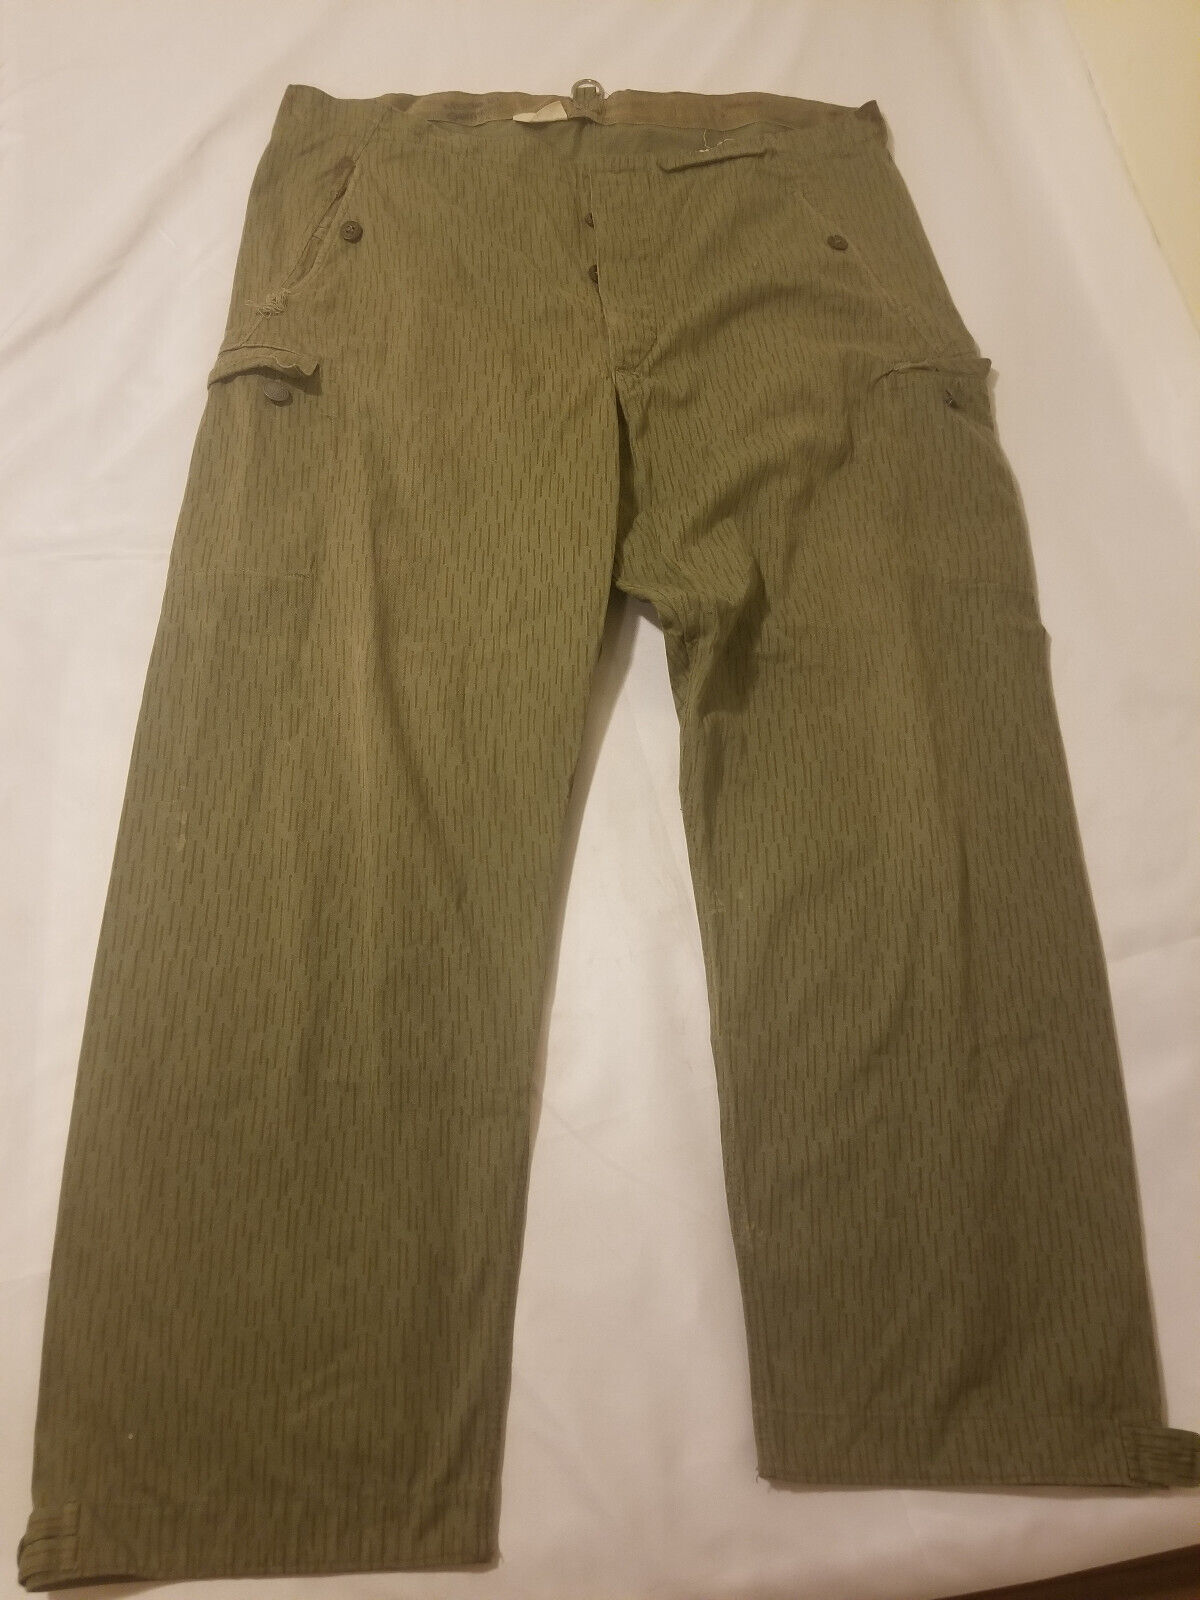 East German DDR NVA Raindrop Strichtarn Pants Trousers SG56  XL Tall